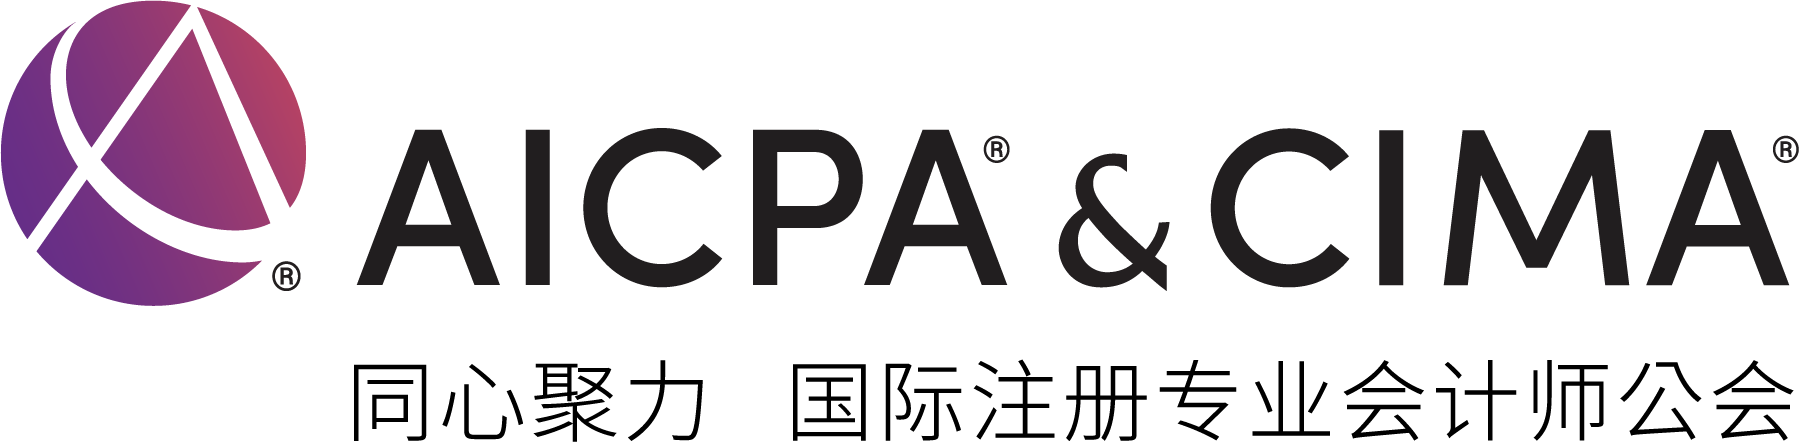 AICPA&CIMA_CGMA_国际注册专业会计师公会_英国皇家特许管理会计师公会|CIMA中国唯一官方网站